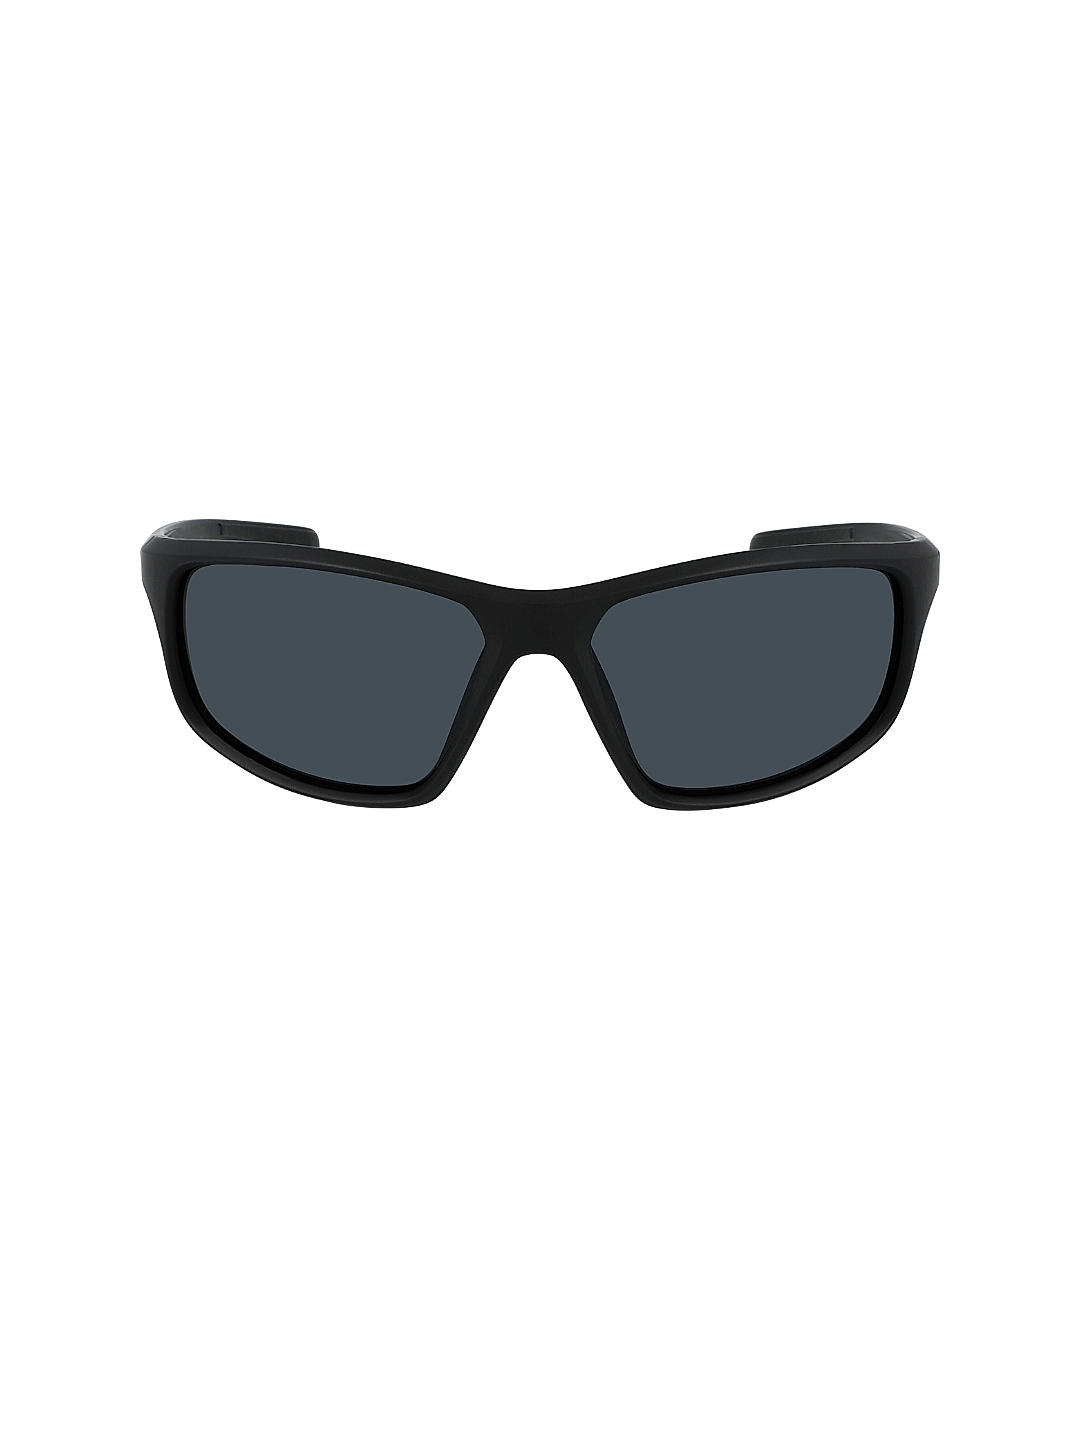 Buy Black Slick Creek Sunglasses for Men Online at Columbia Sportswear